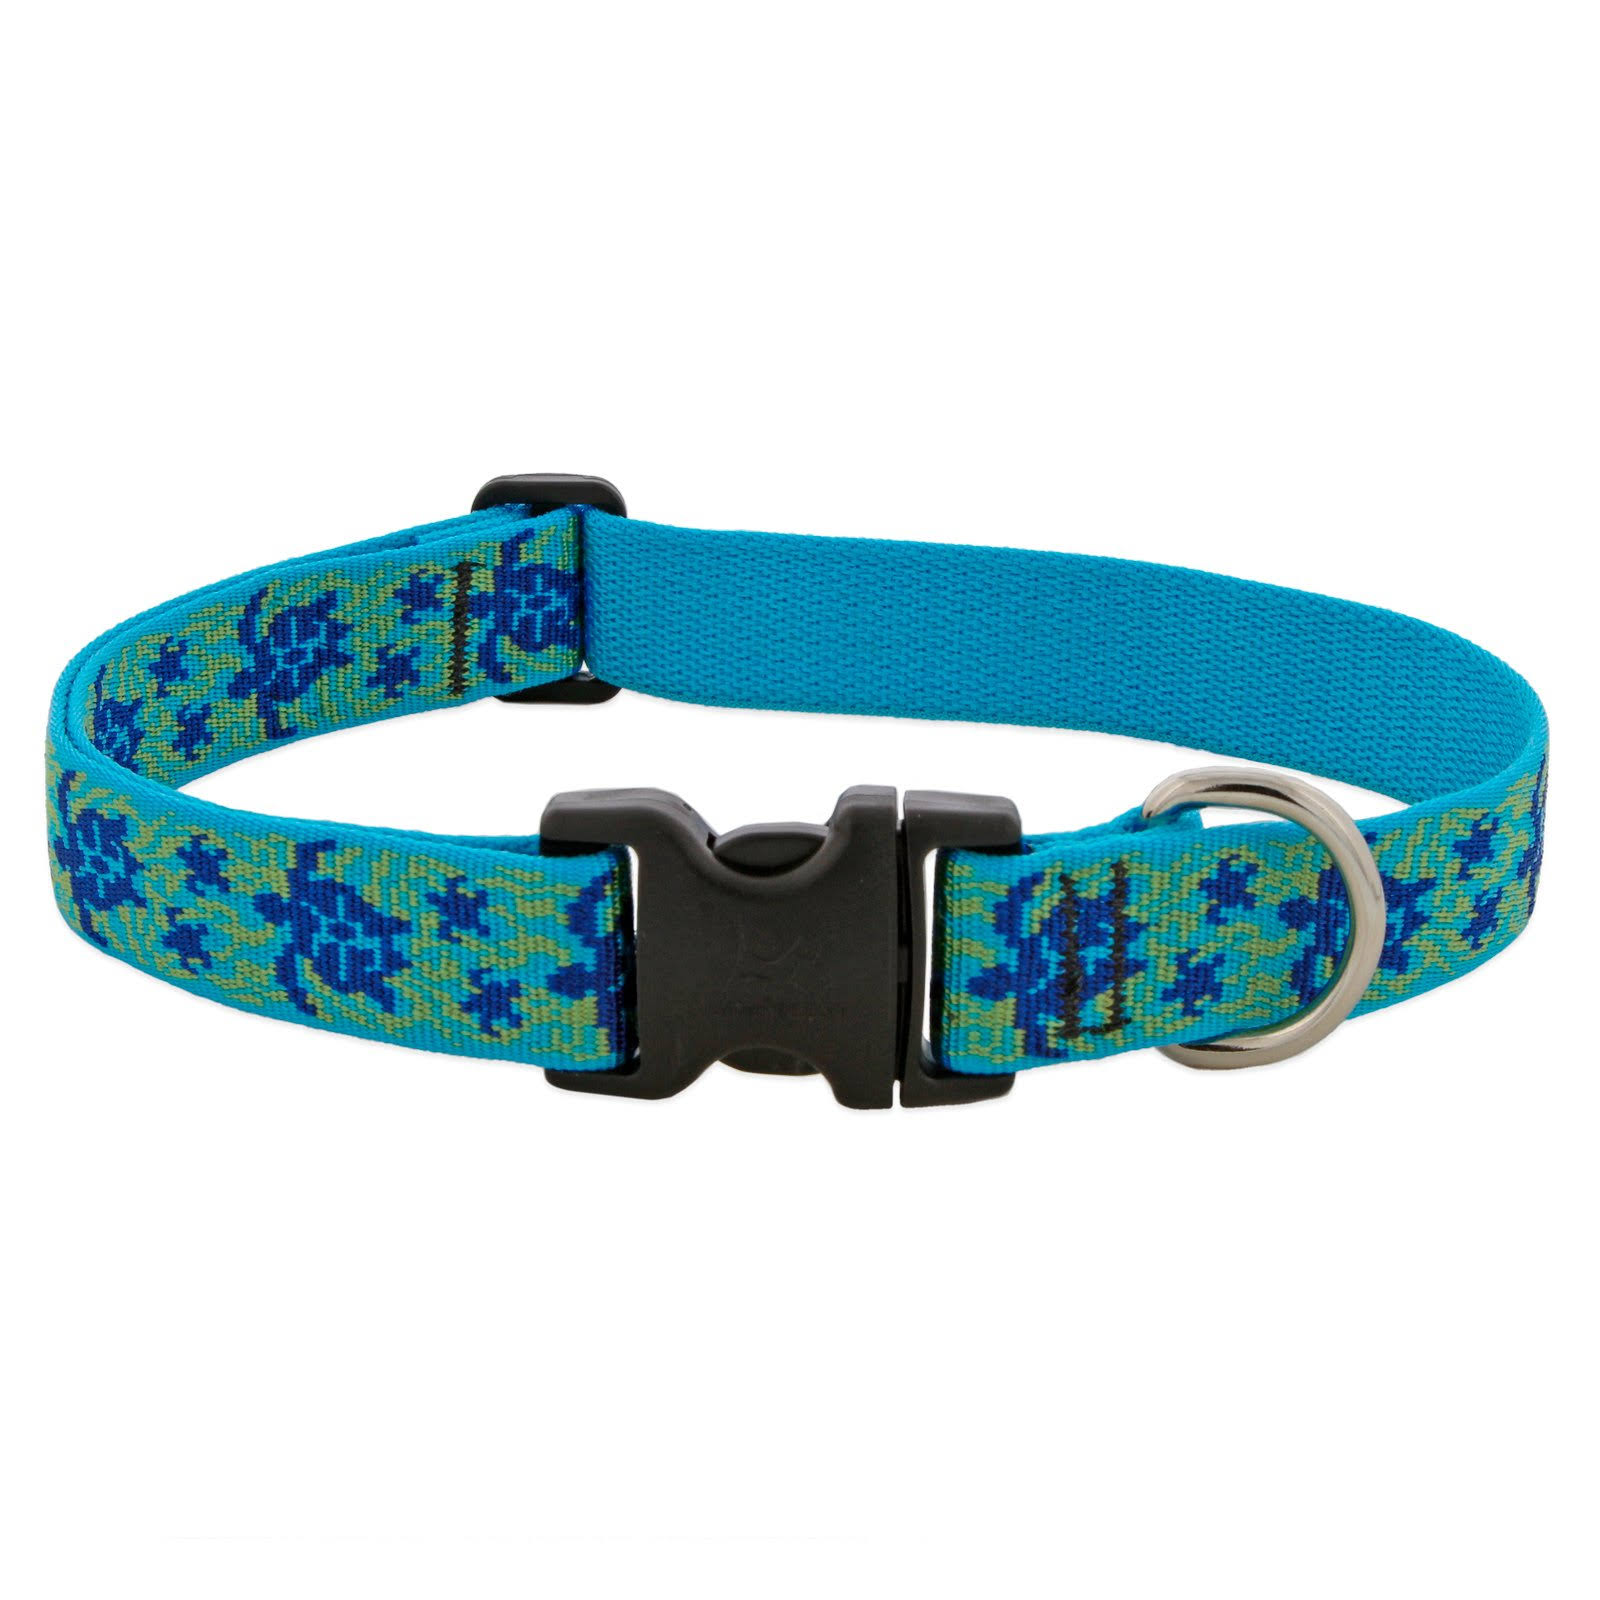 Lupine Adjustable Dog Collar - Turtle Reef Patterned